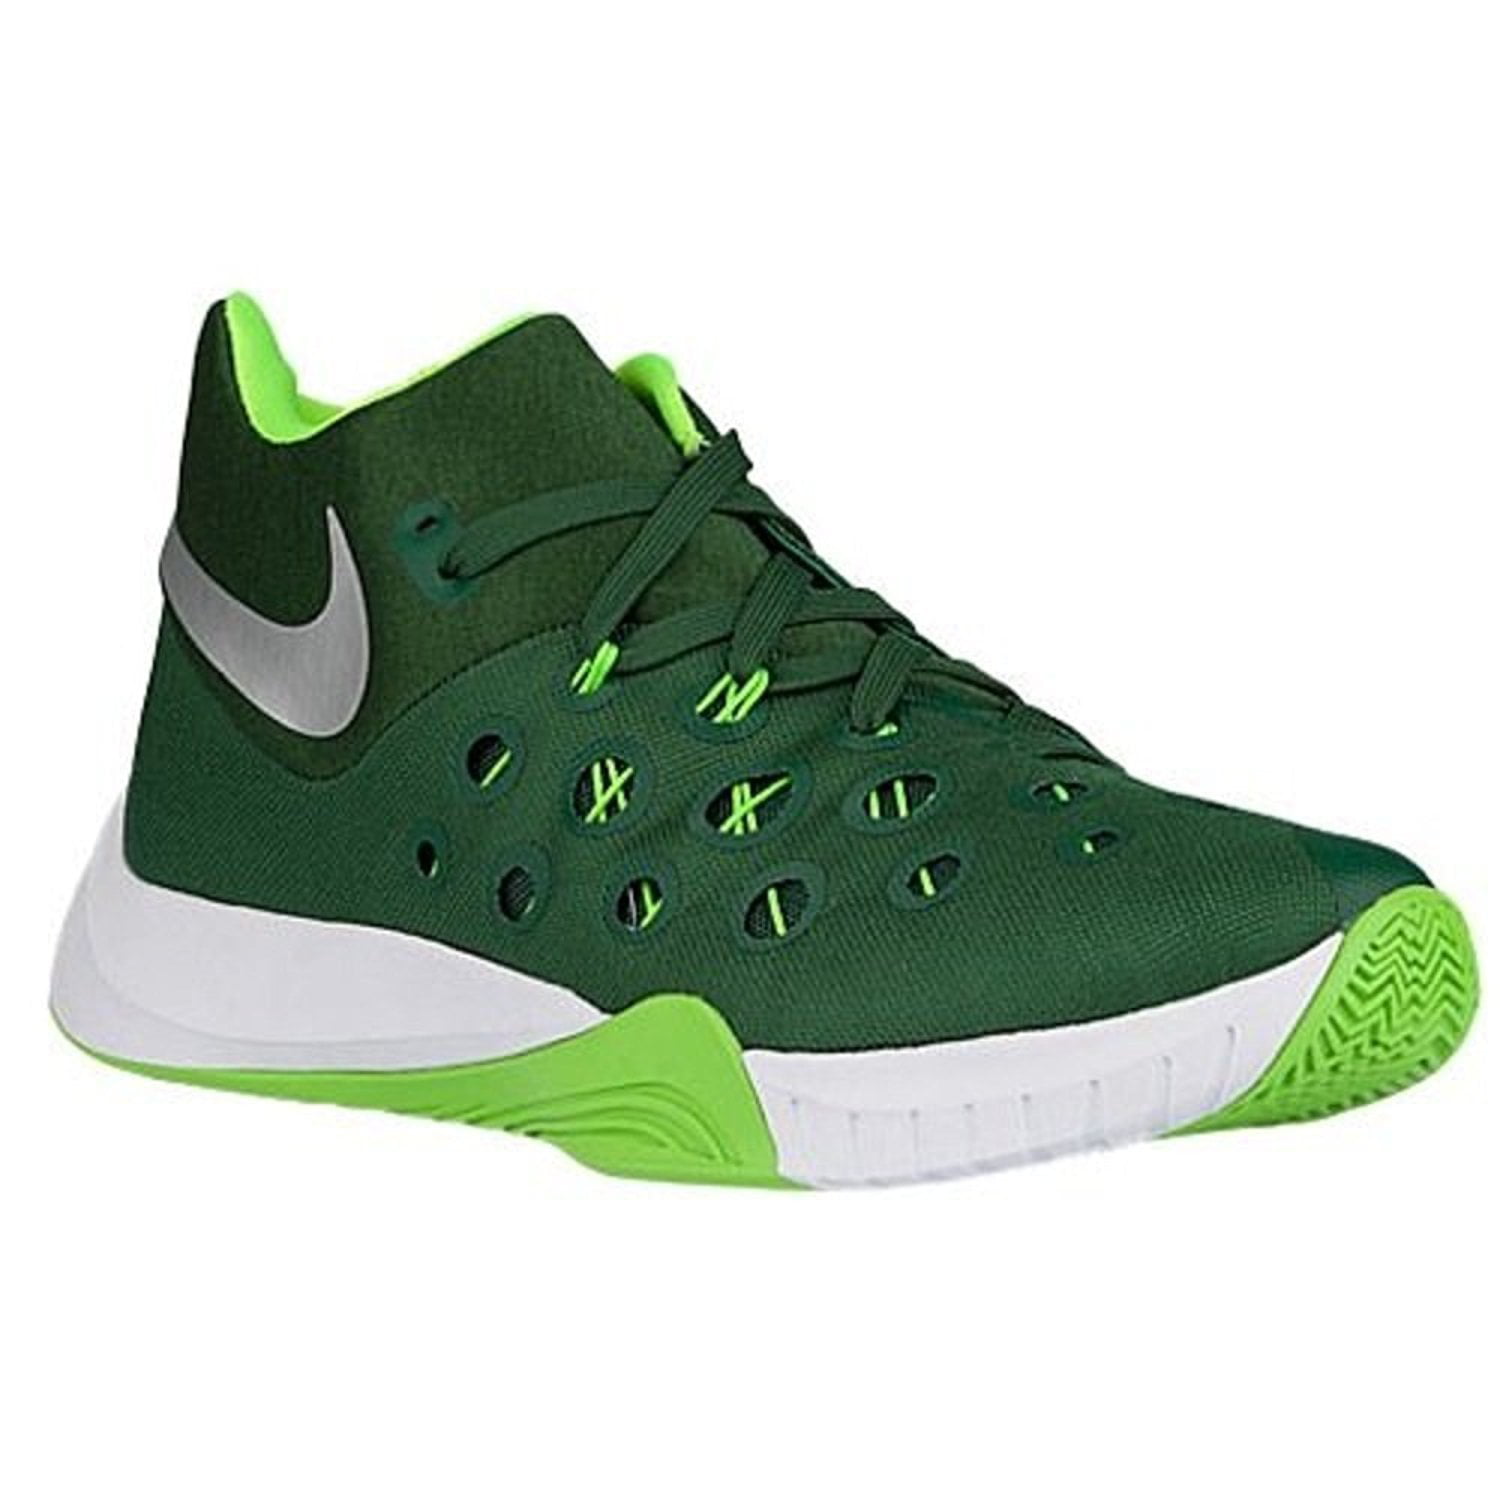 Nike Zoom 2015 nk749883 303 Green/Electric Green/Metallic Silver, M US) (Gorge Green/Electric Green/Metallic Silver, 10 M US) - Walmart.com